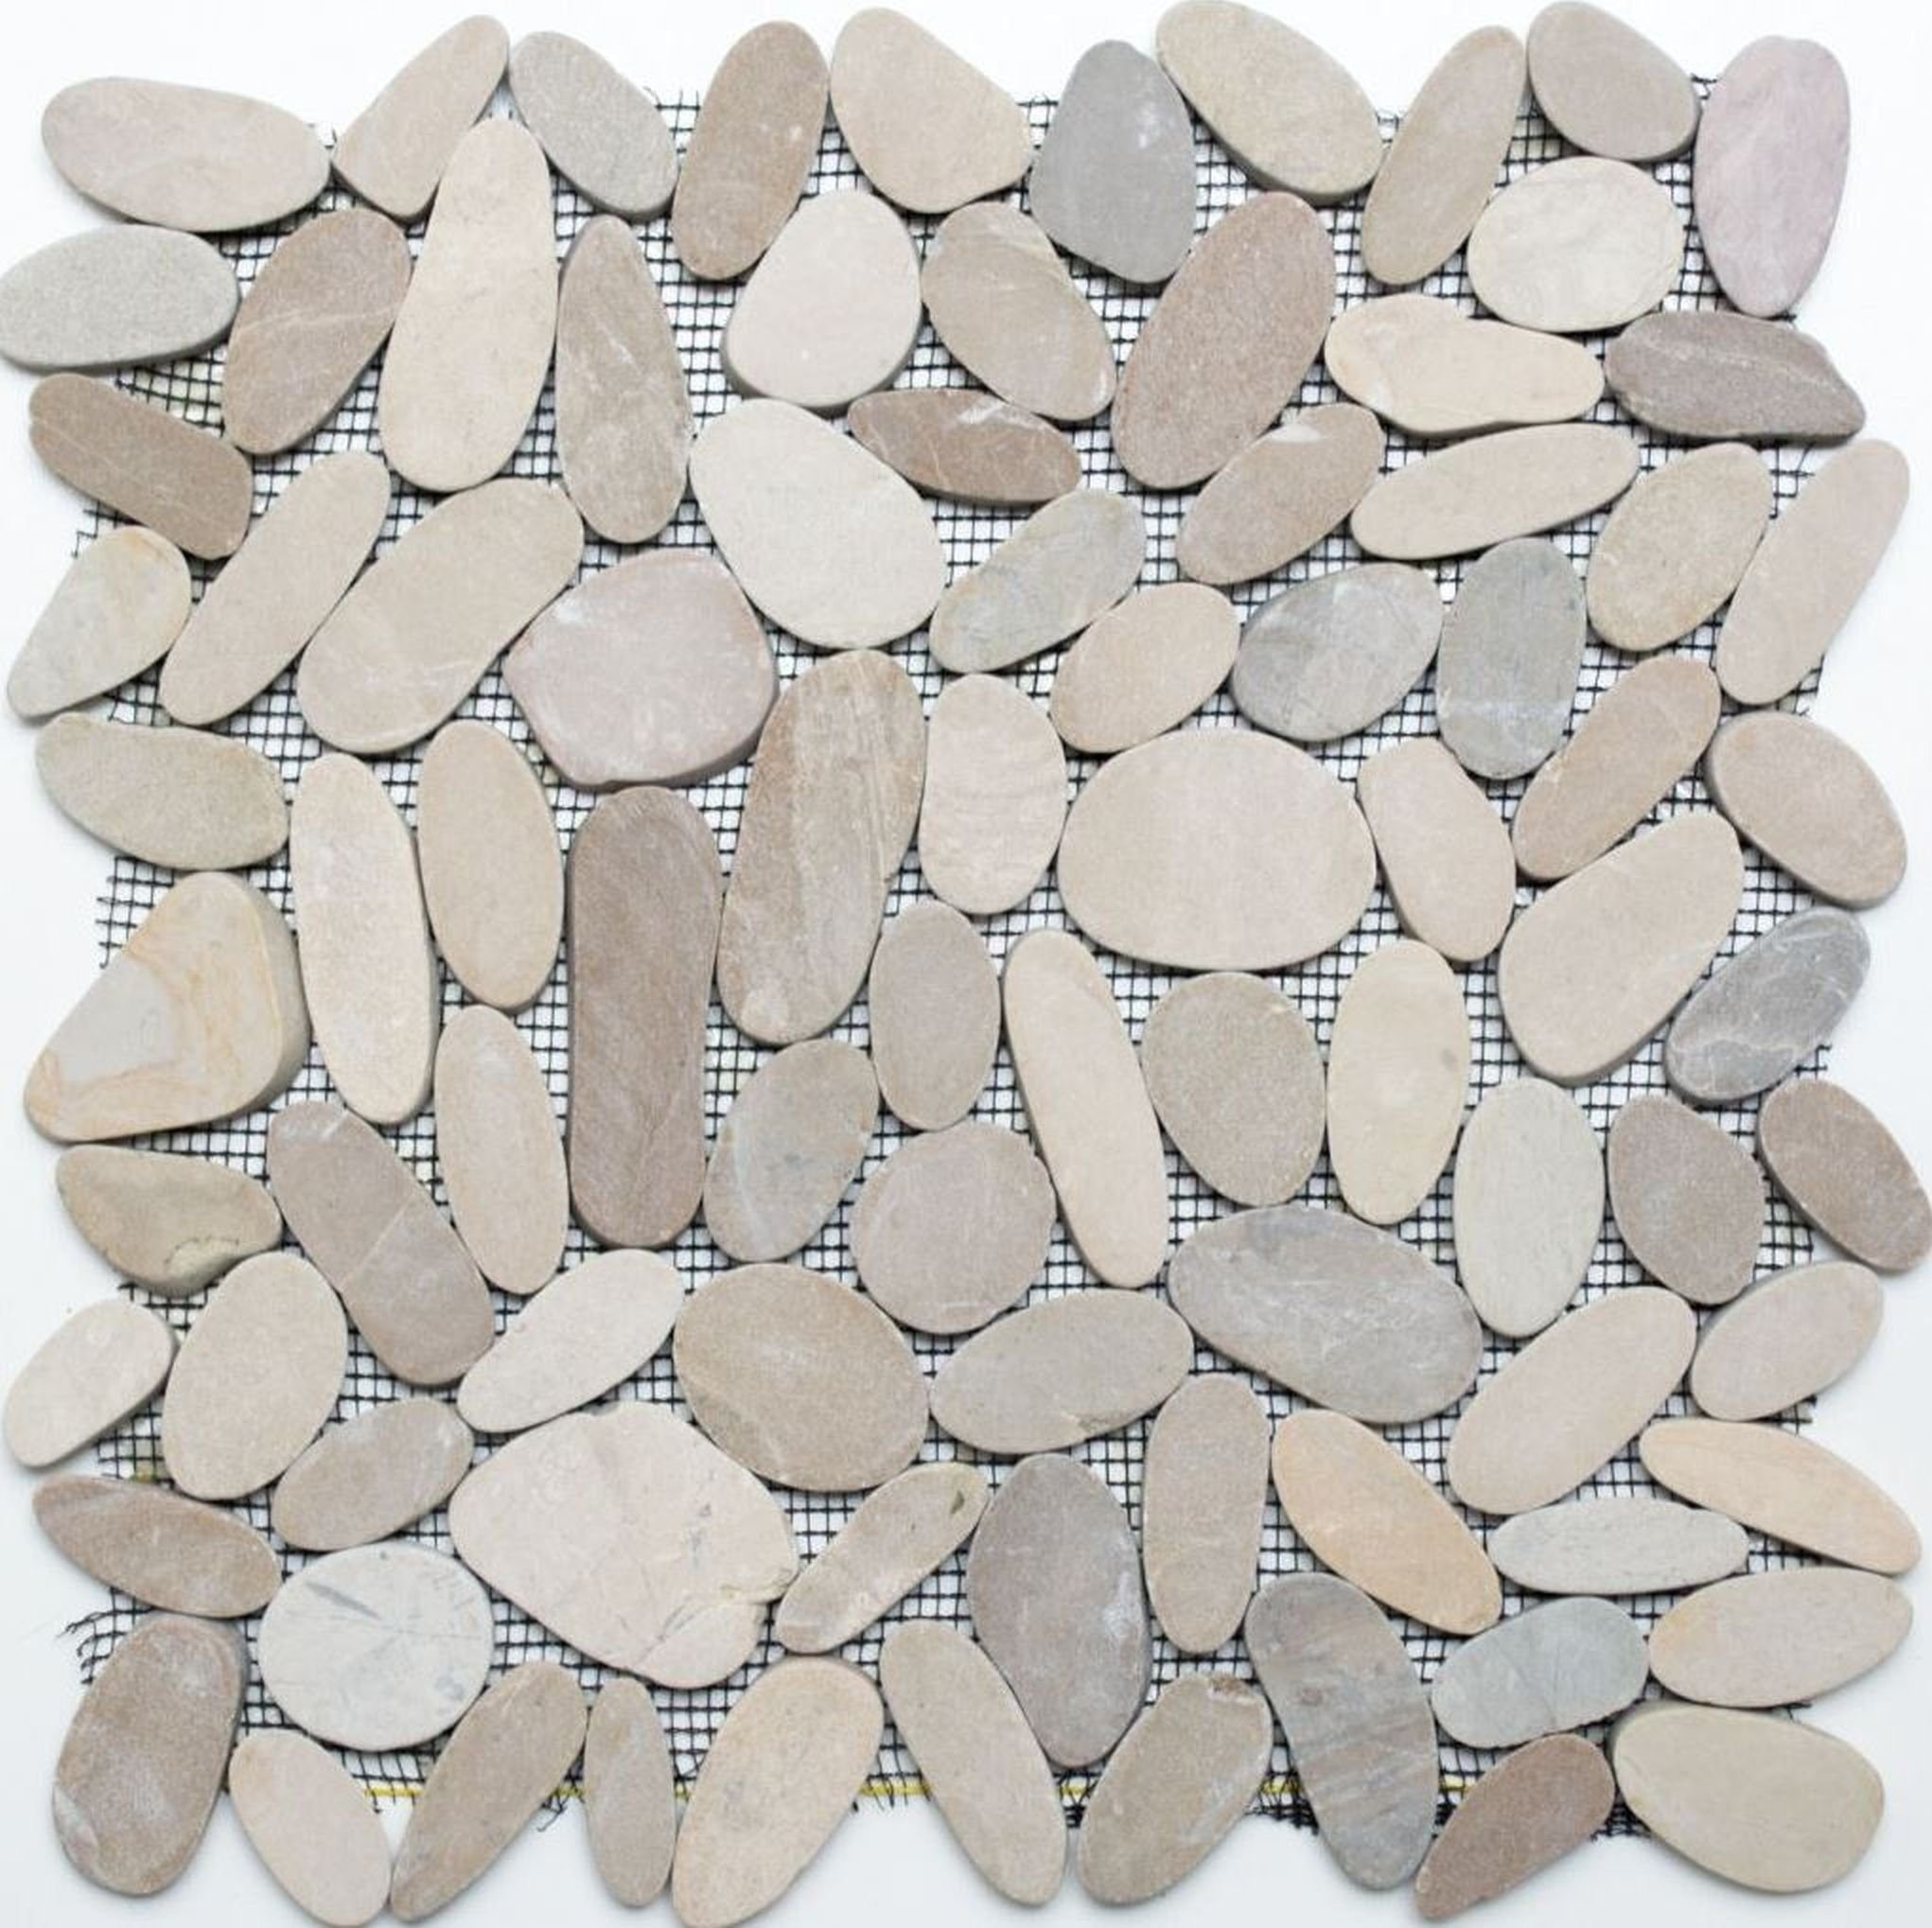 Mosani Mosaikfliesen Oval Flusskiesel Natursteinteppich hellbeige matt / 10 Matten